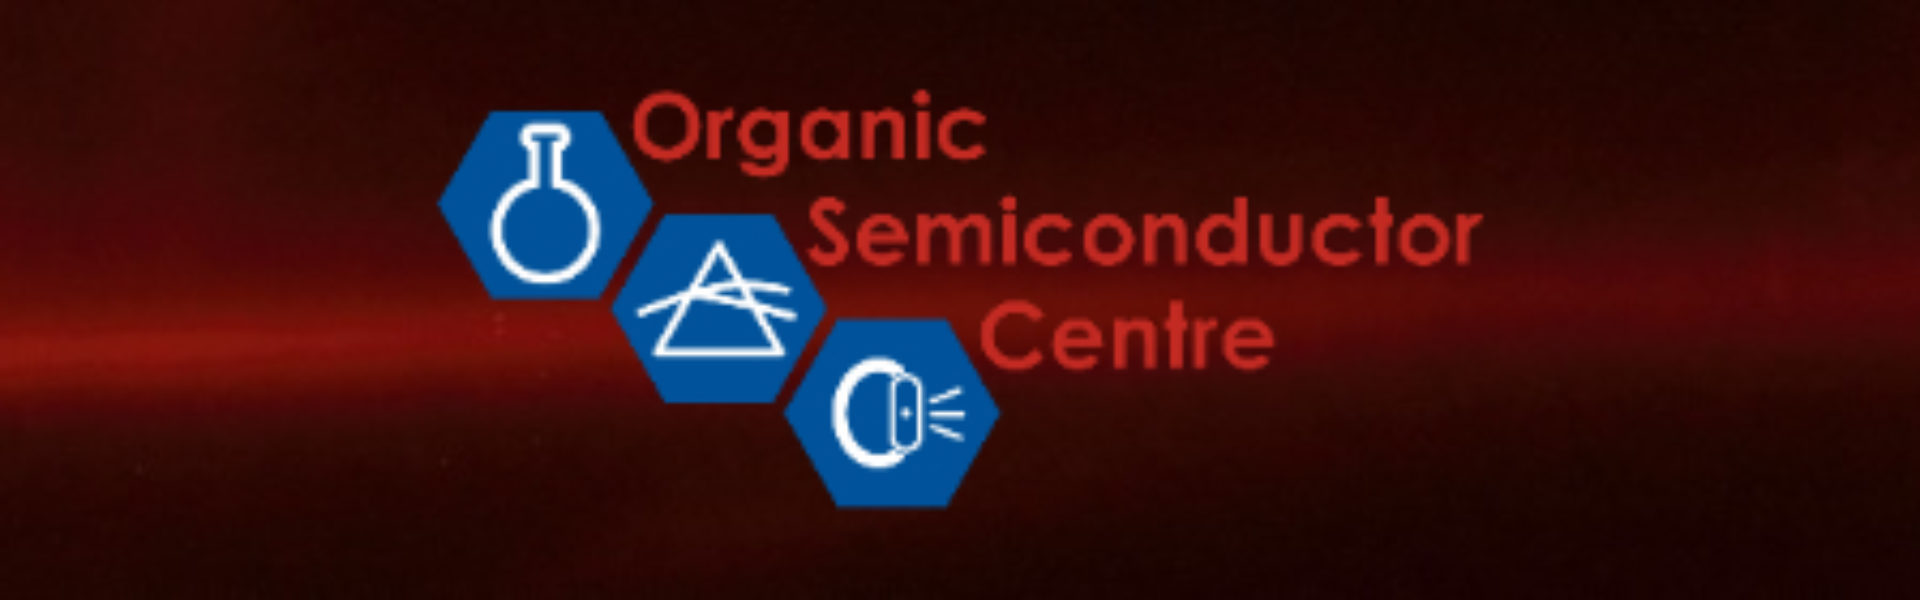 The Organic Semiconductor Centre logo